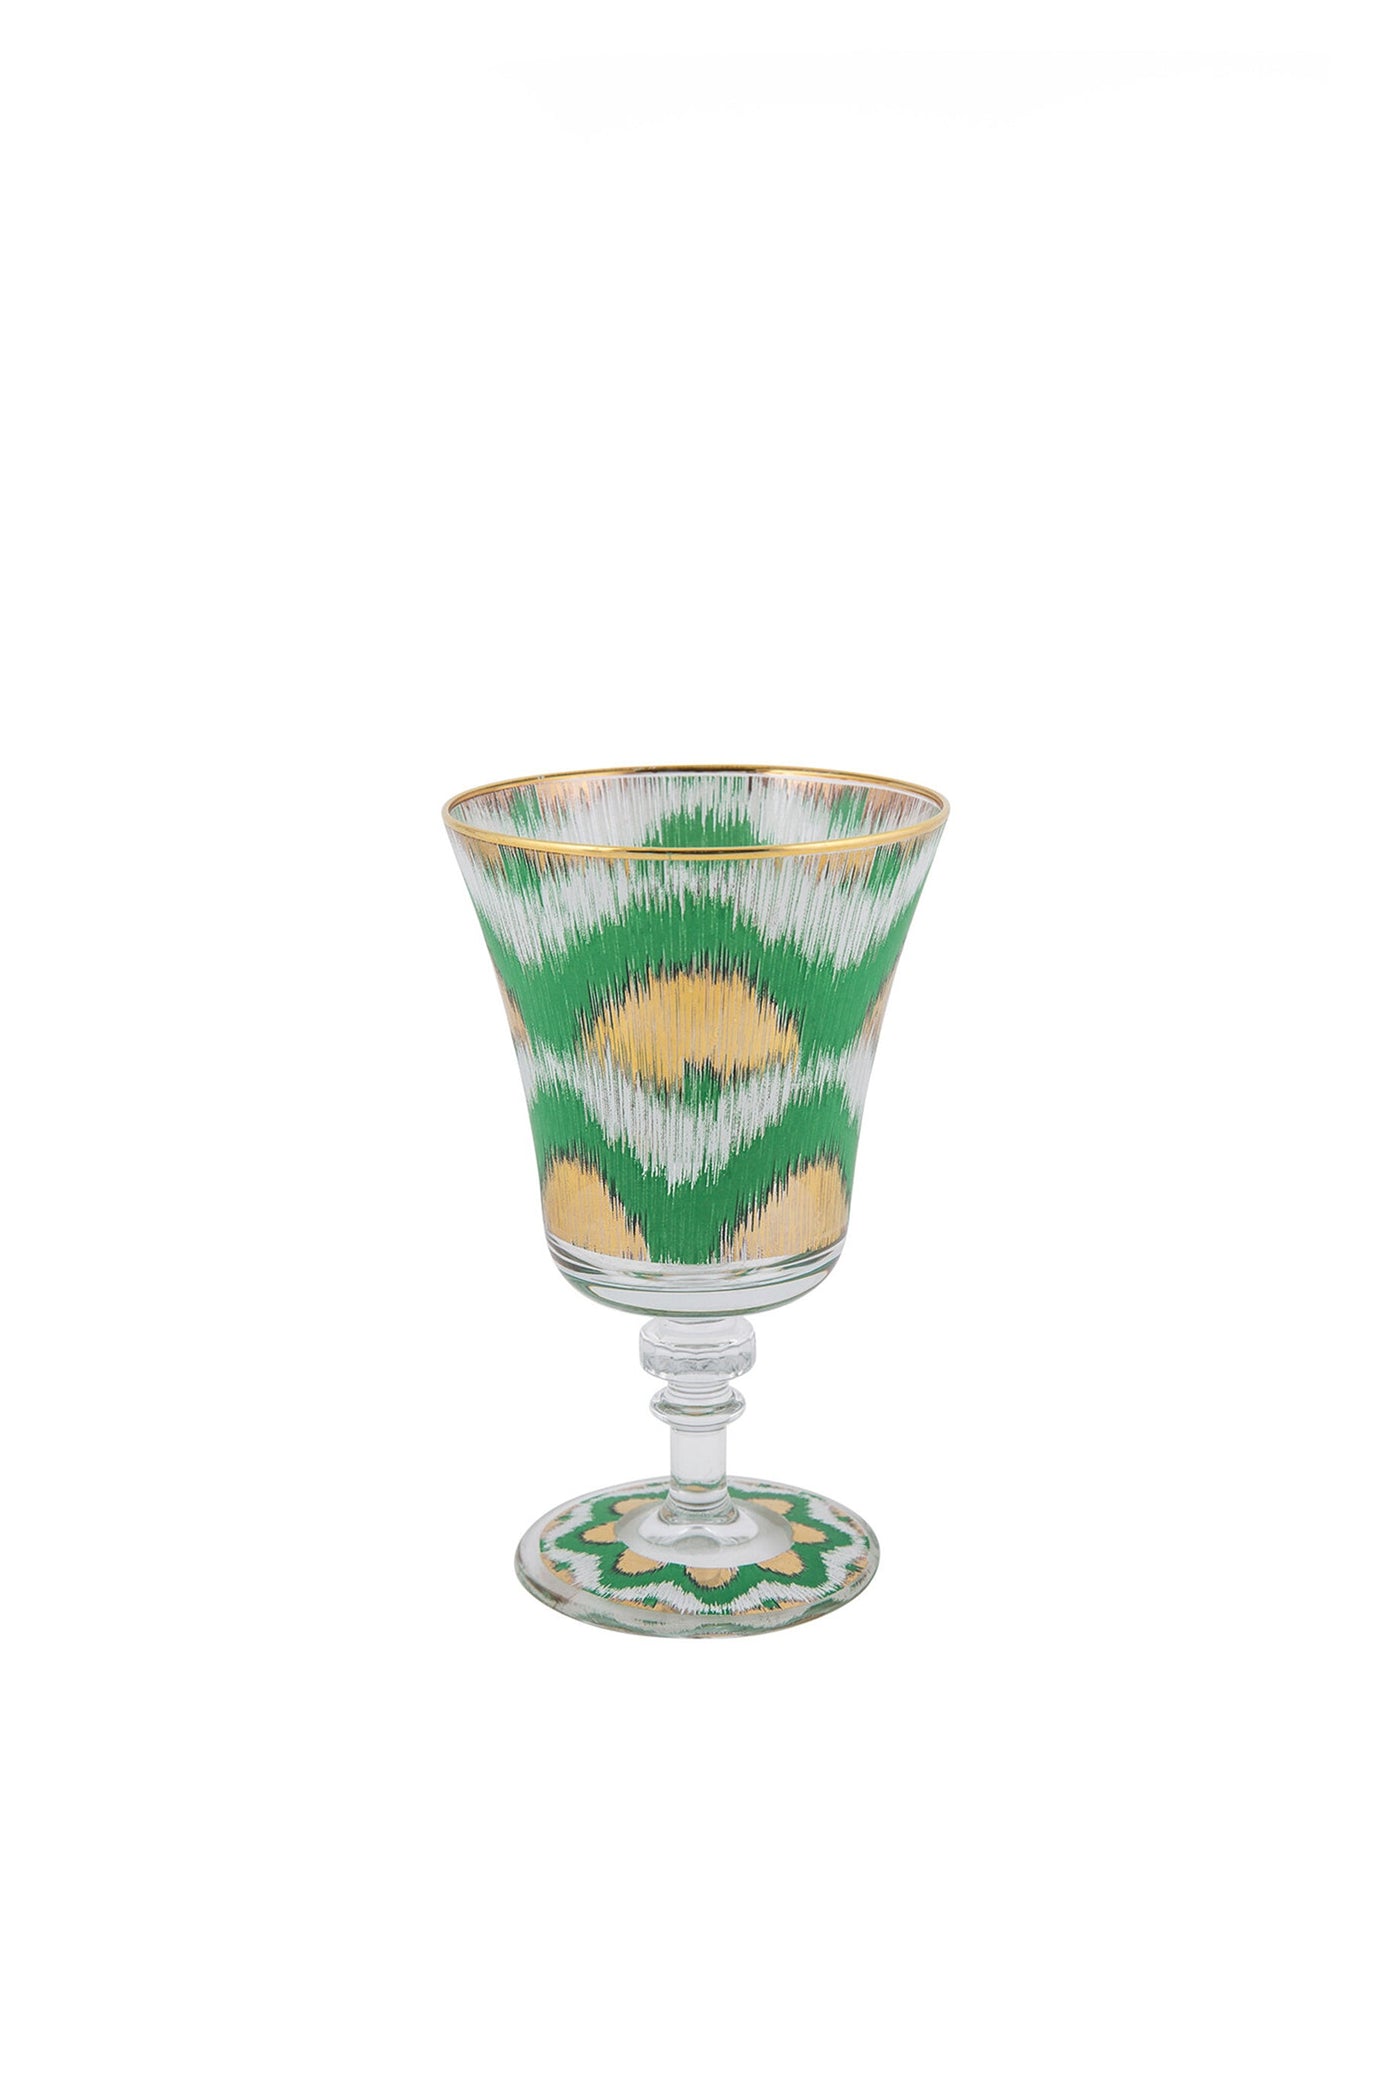 Les Ottomans Ikat Glass - Green